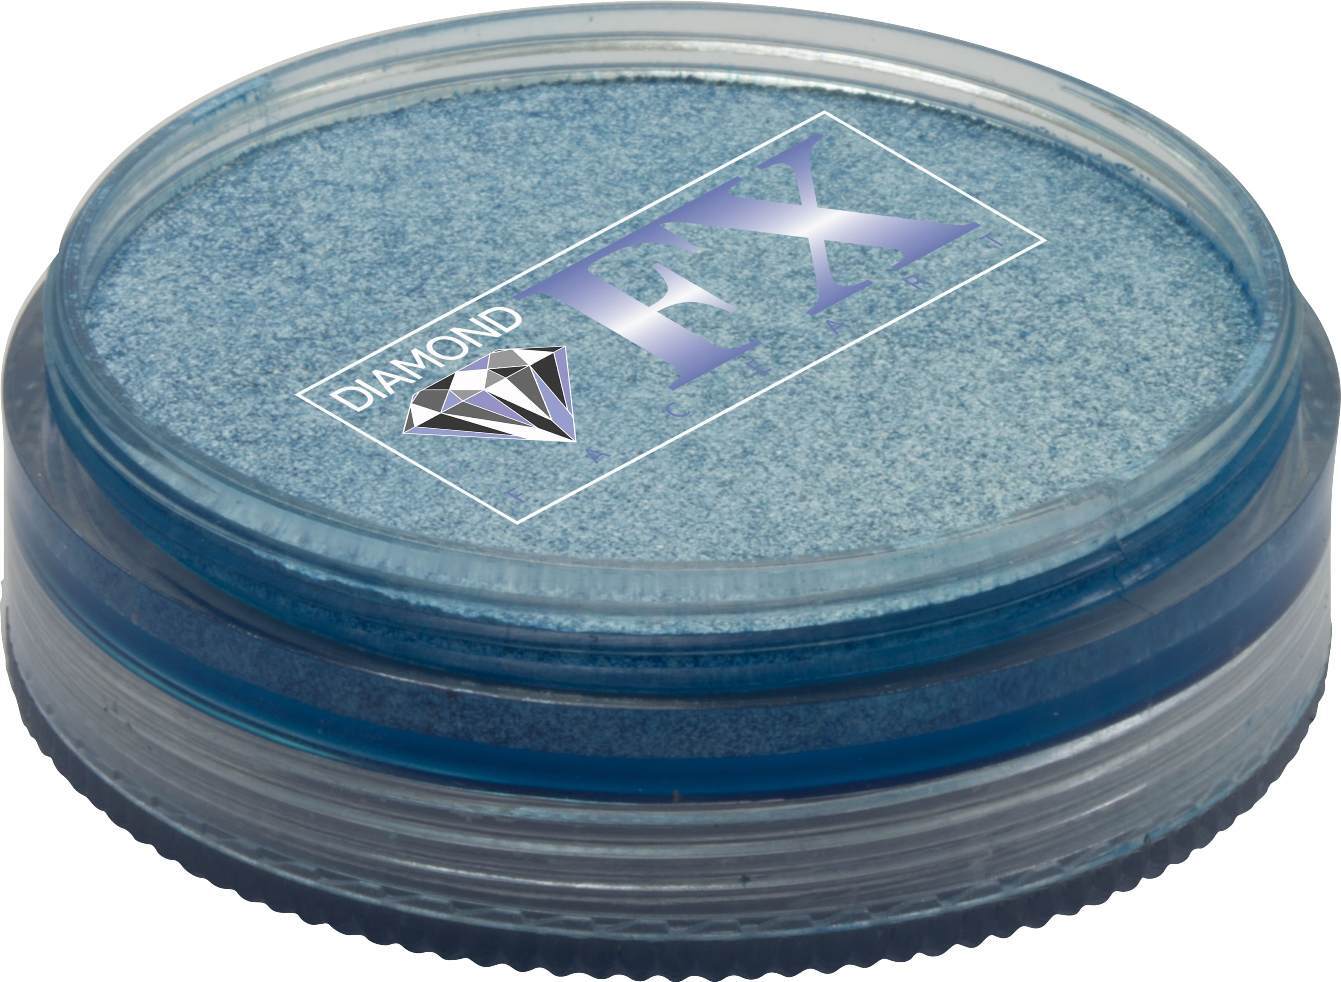 Diamond FX Baby Blue Metallic 45g - Small Image